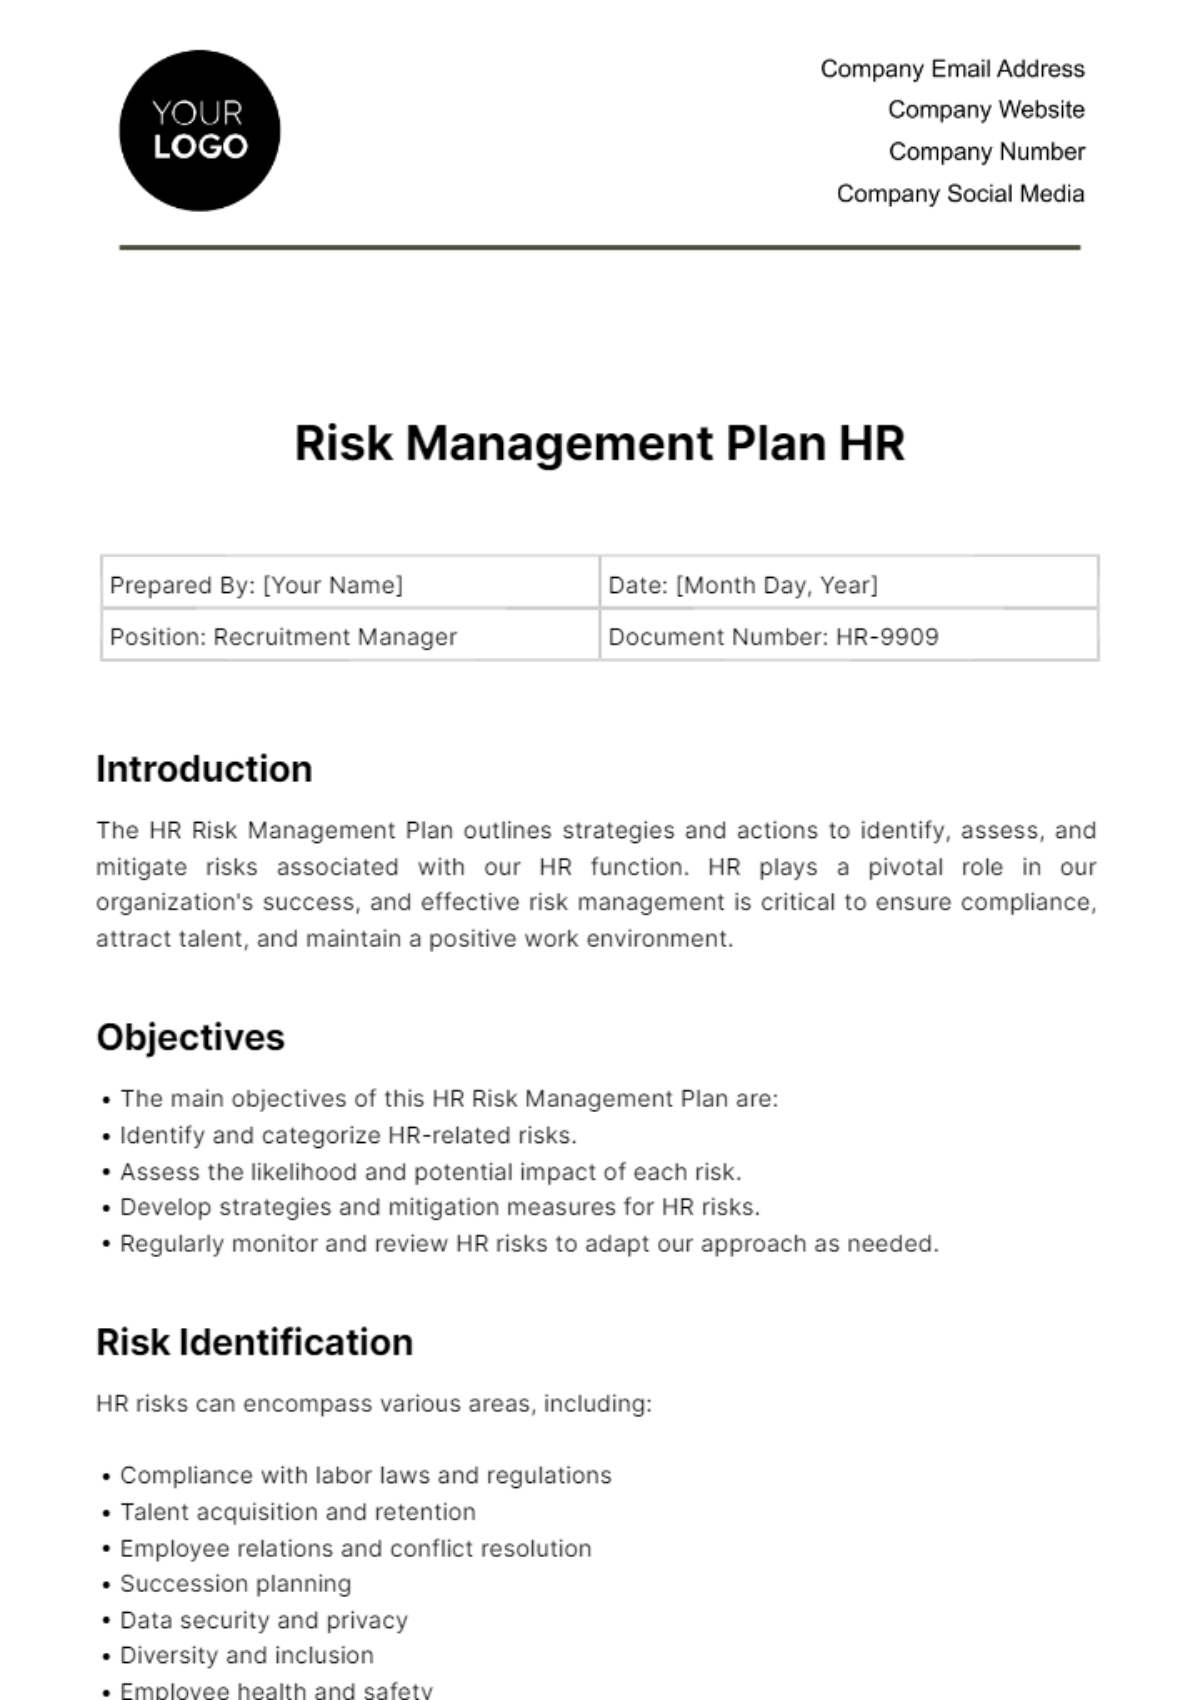 Risk Management Plan HR Template